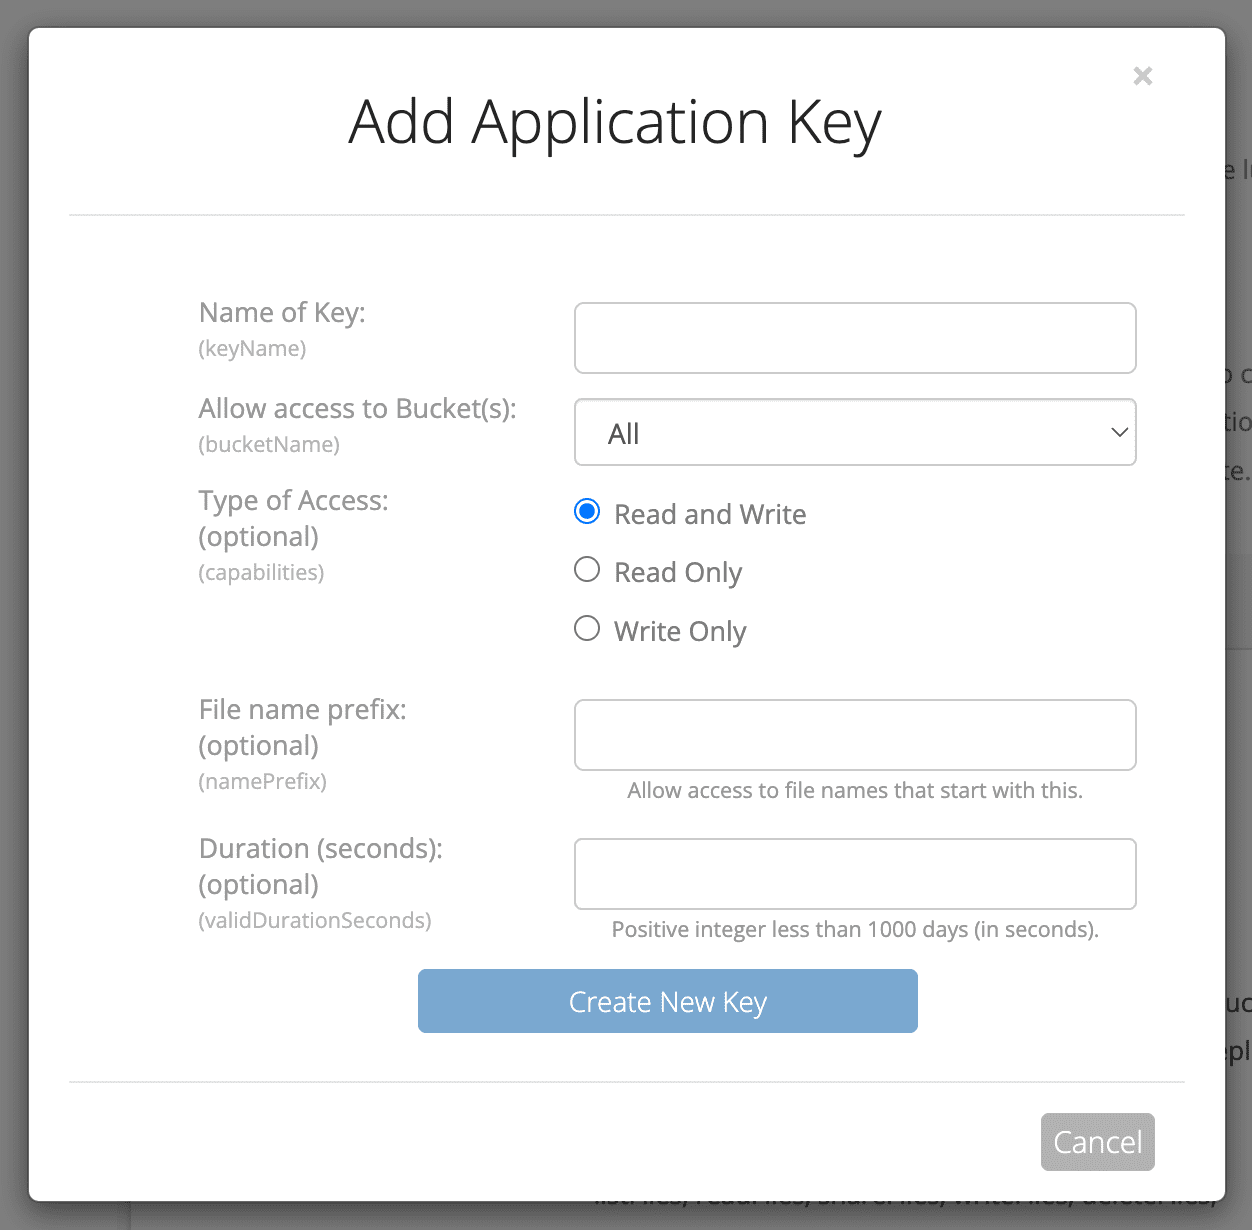 Configuring Application Key details